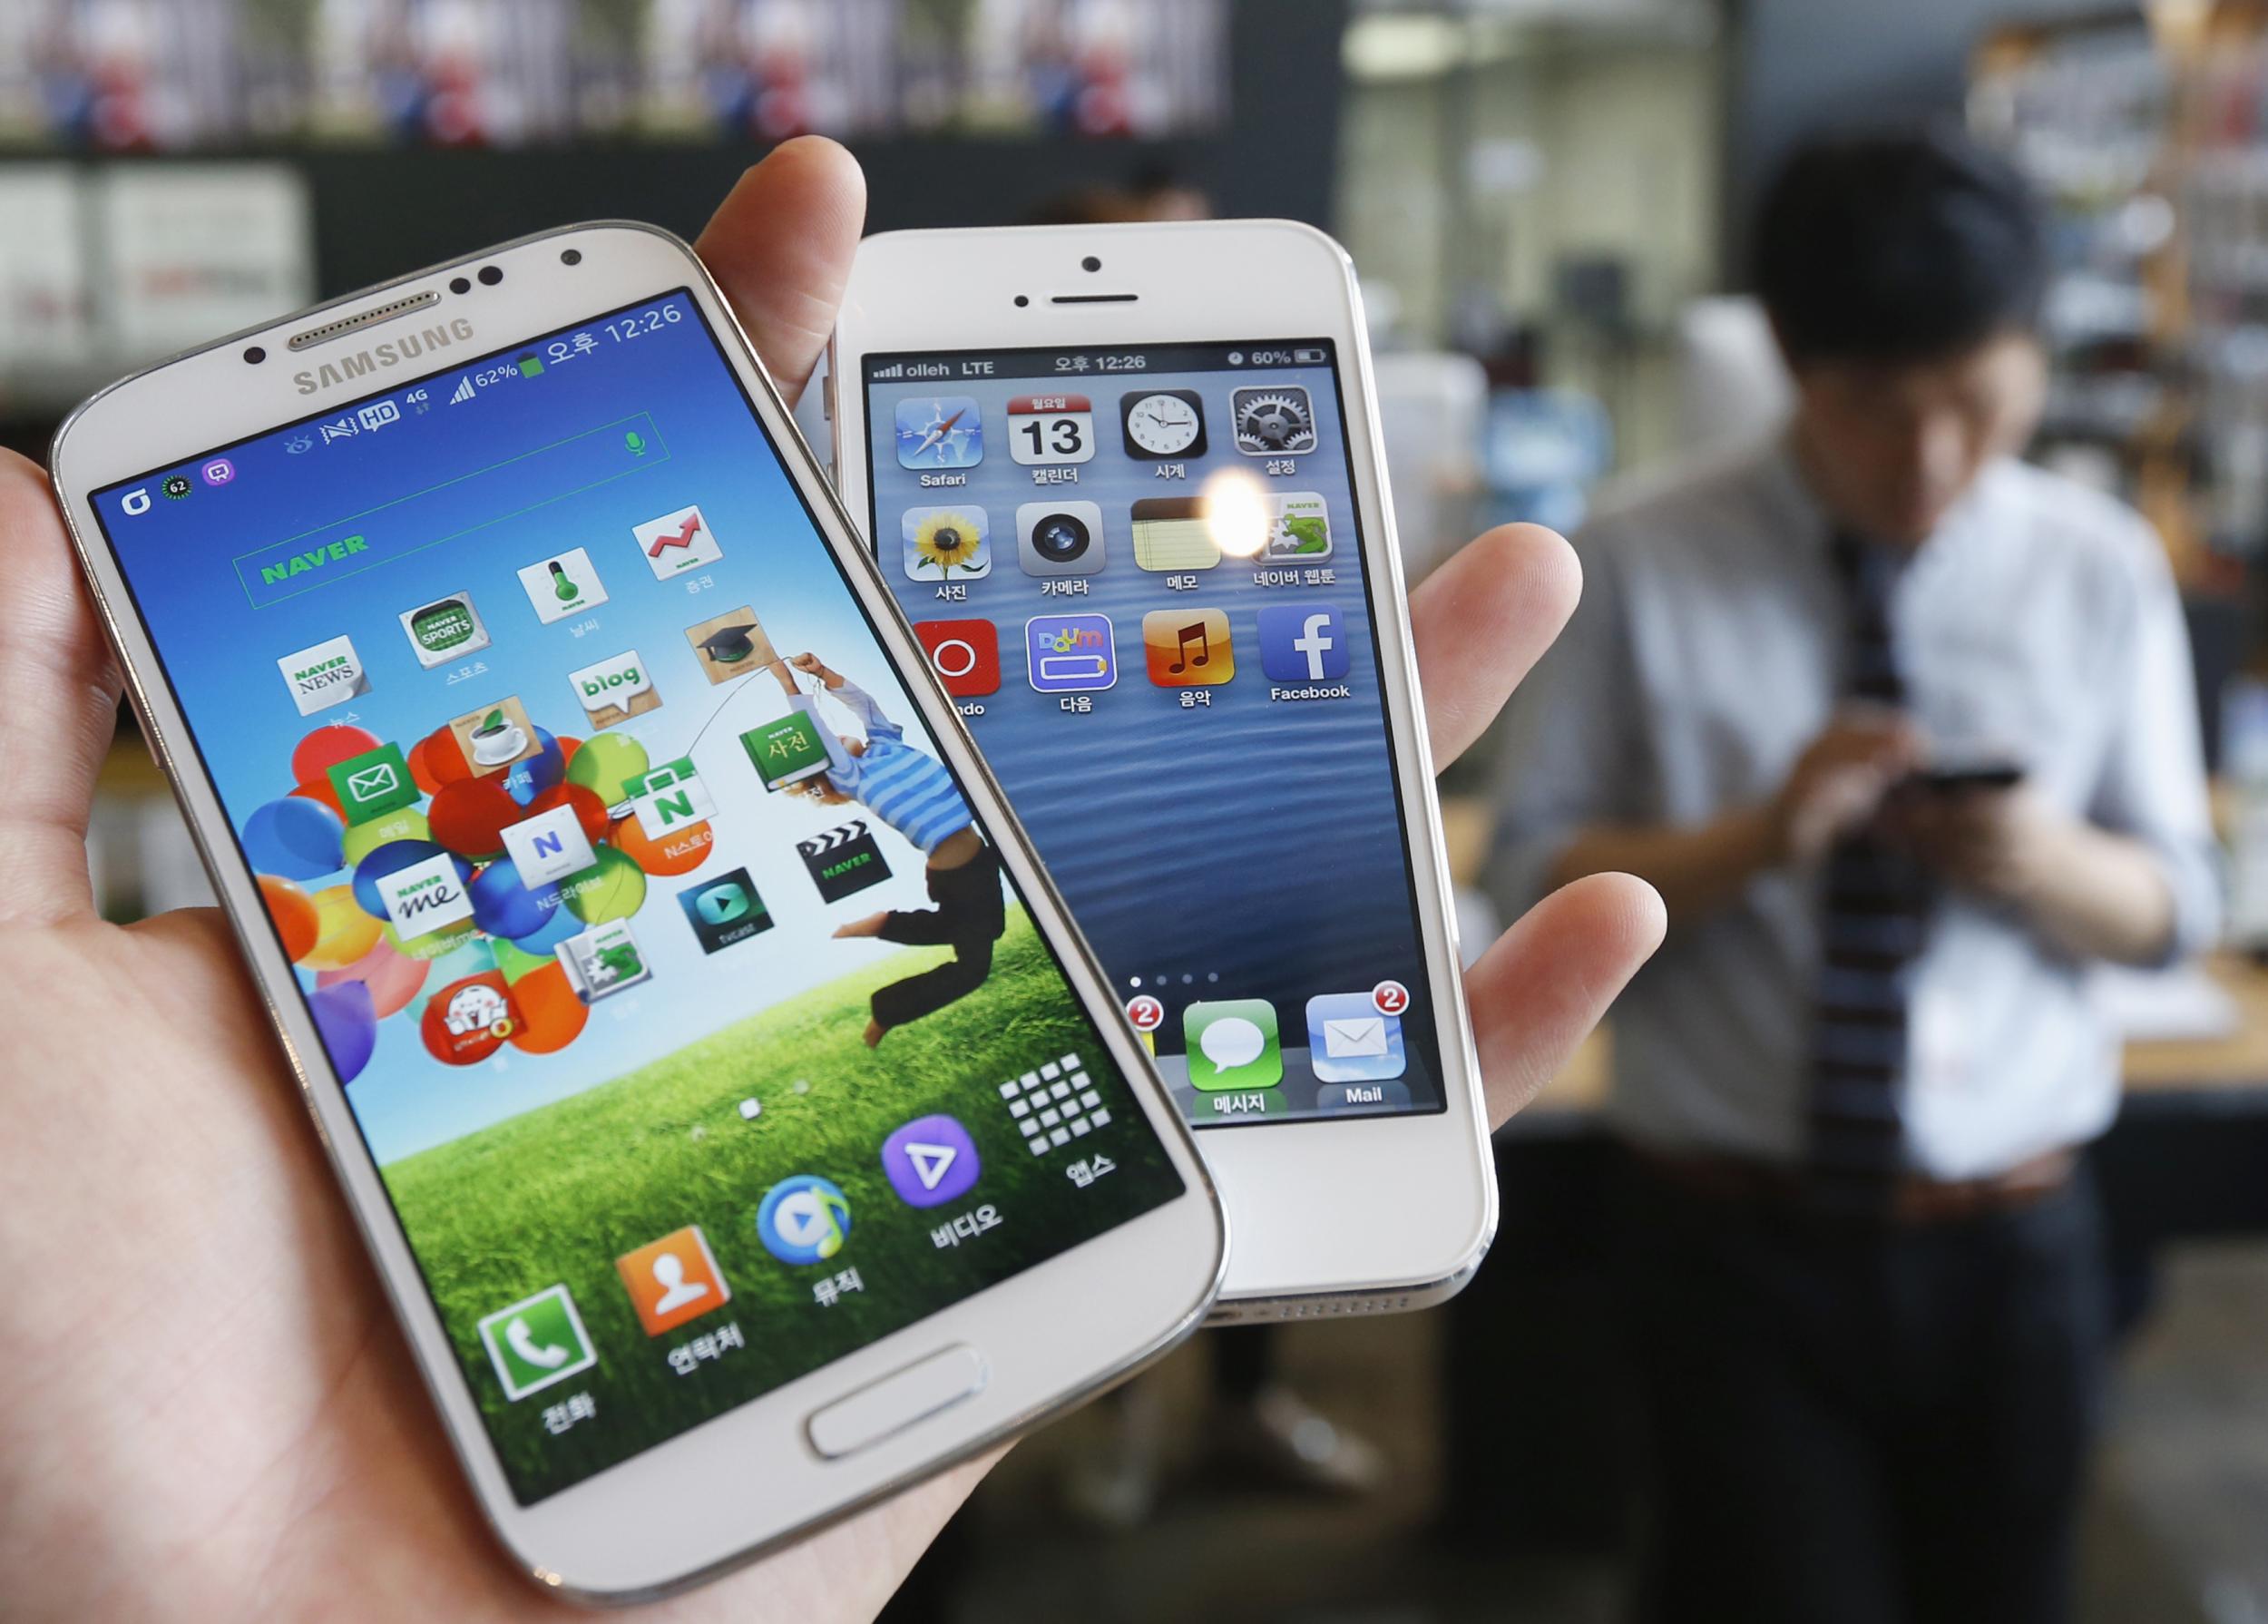 Apple argued that Samsung copied distinctive iPhone features